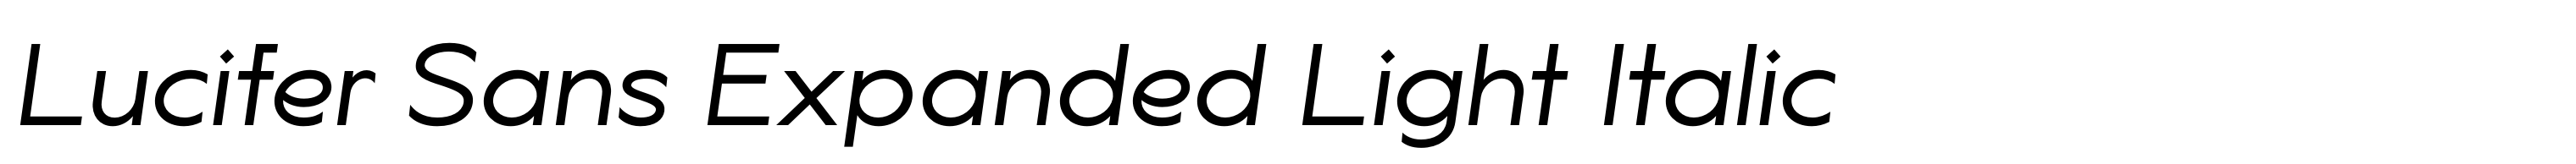 Lucifer Sans Expanded Light Italic